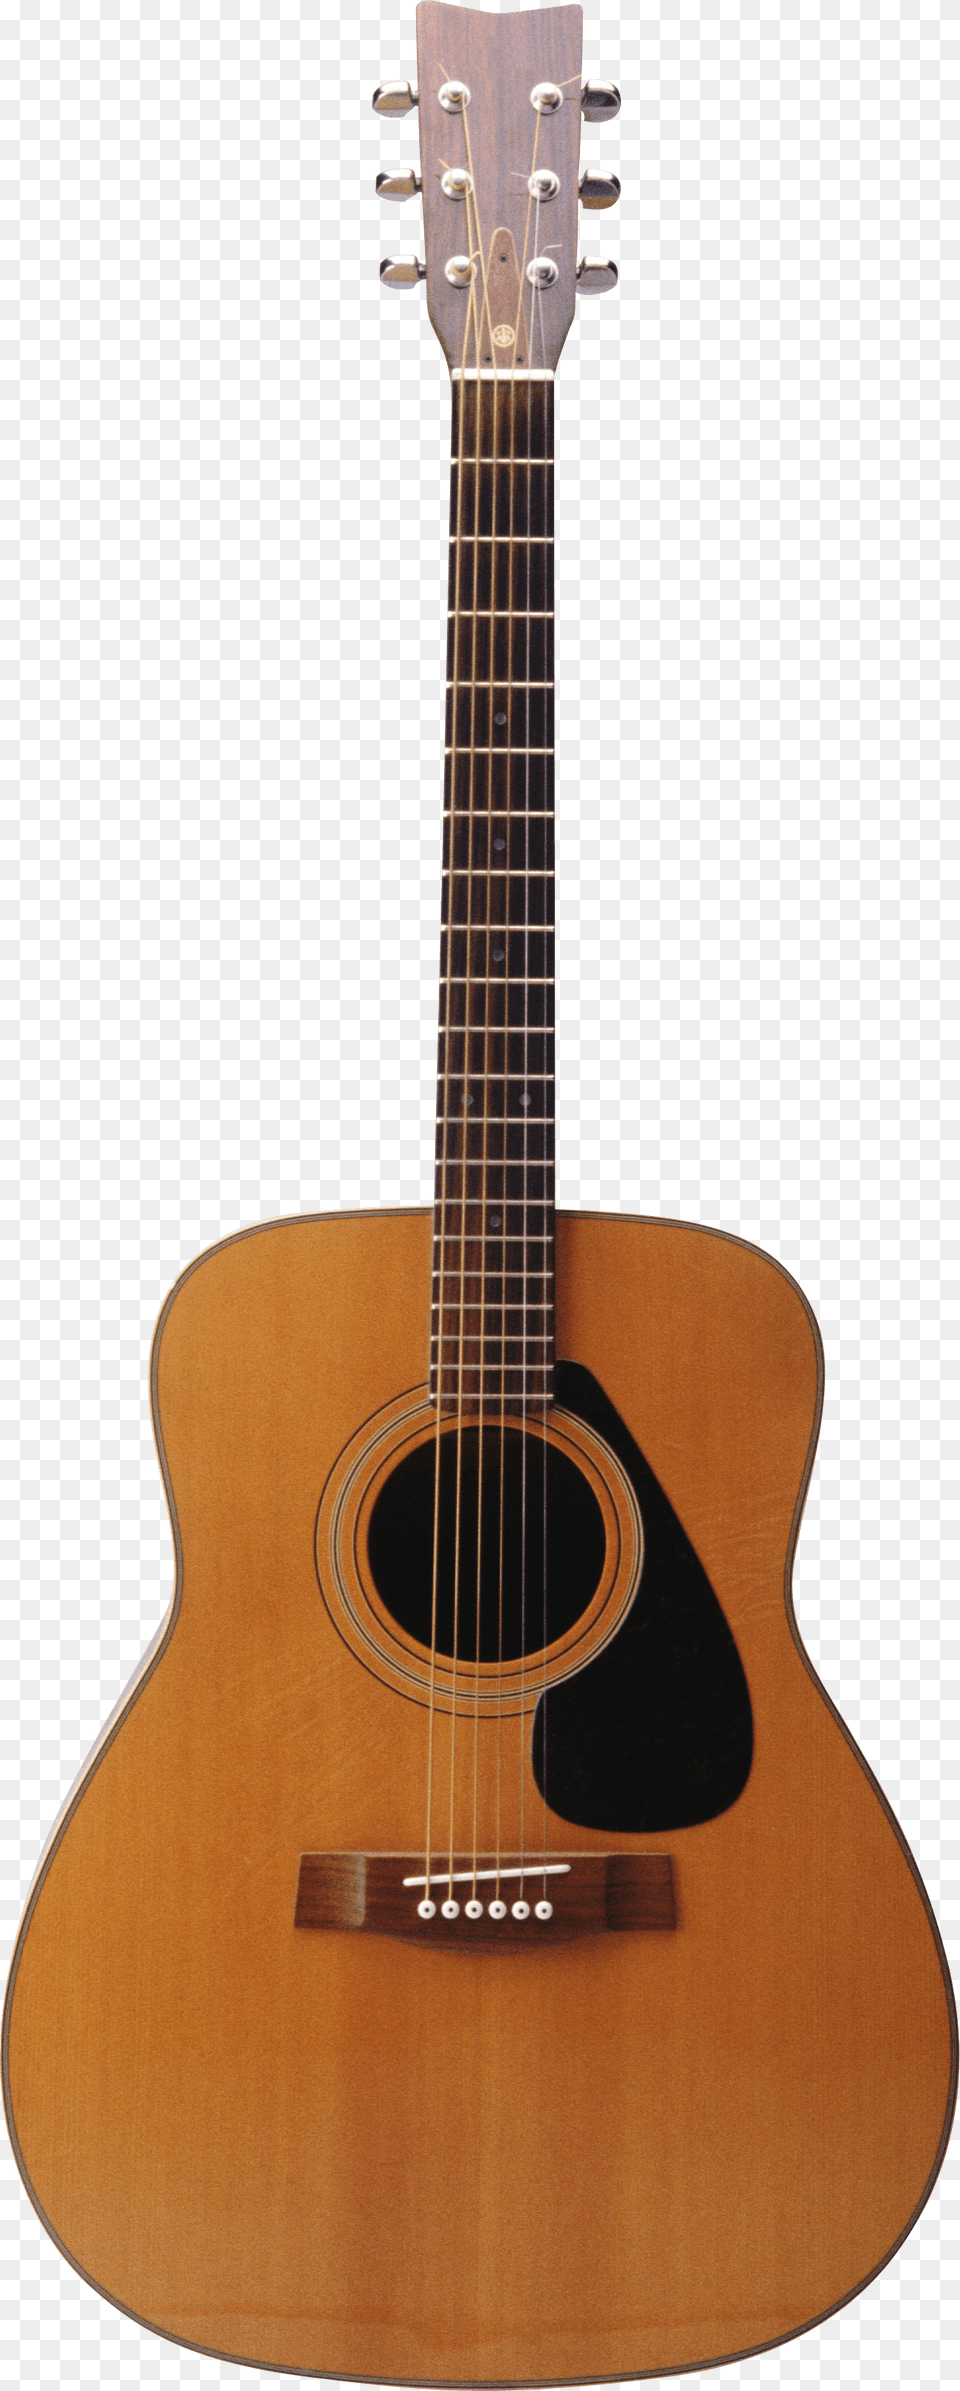 Guitar Image, Musical Instrument Png